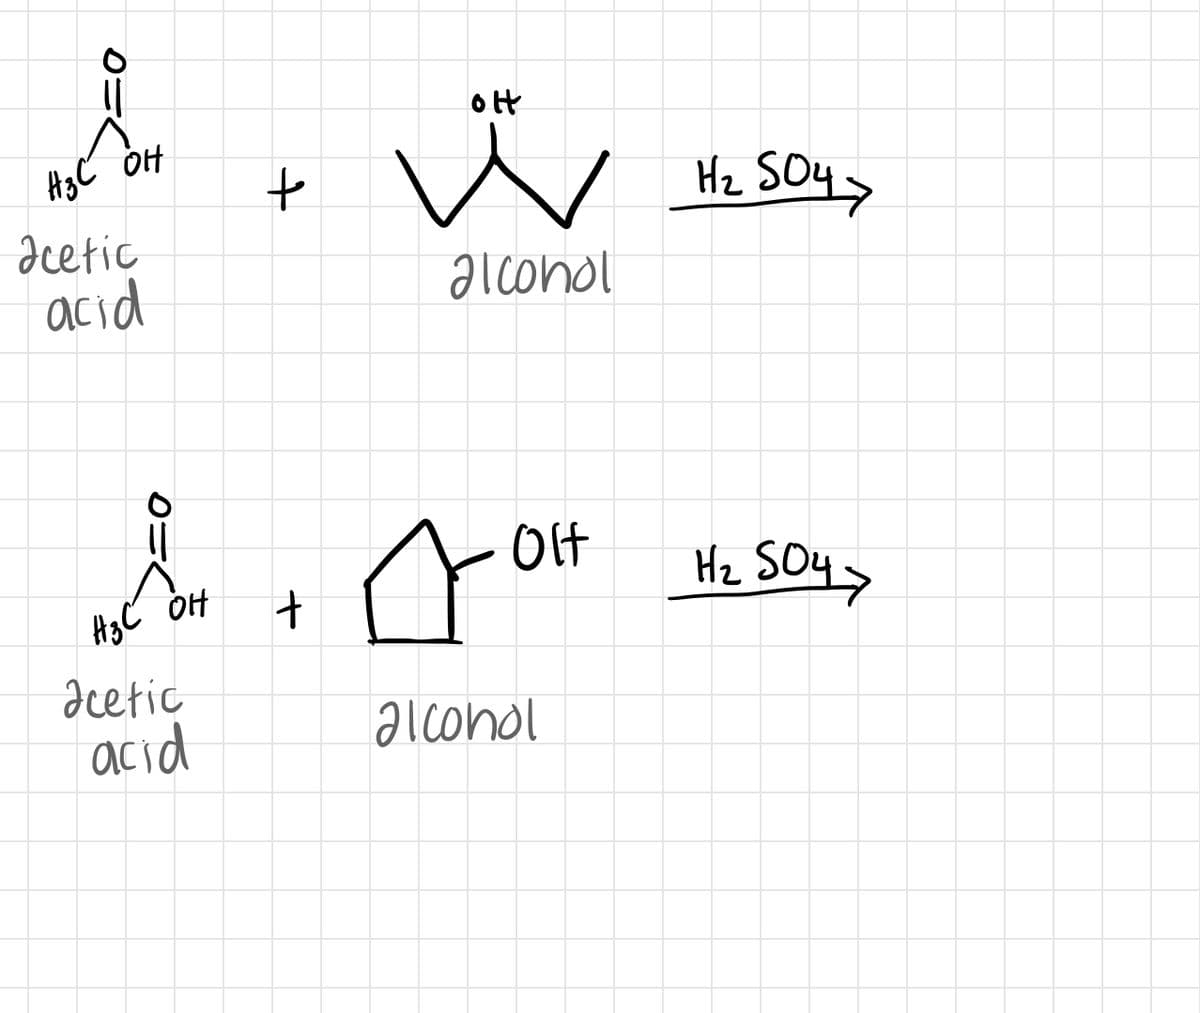 A3C OH
Hz SOy>
acetic
acid
alconol
Olf
Hz SOy>
A3C OH
dcetic
acid
alcohol
